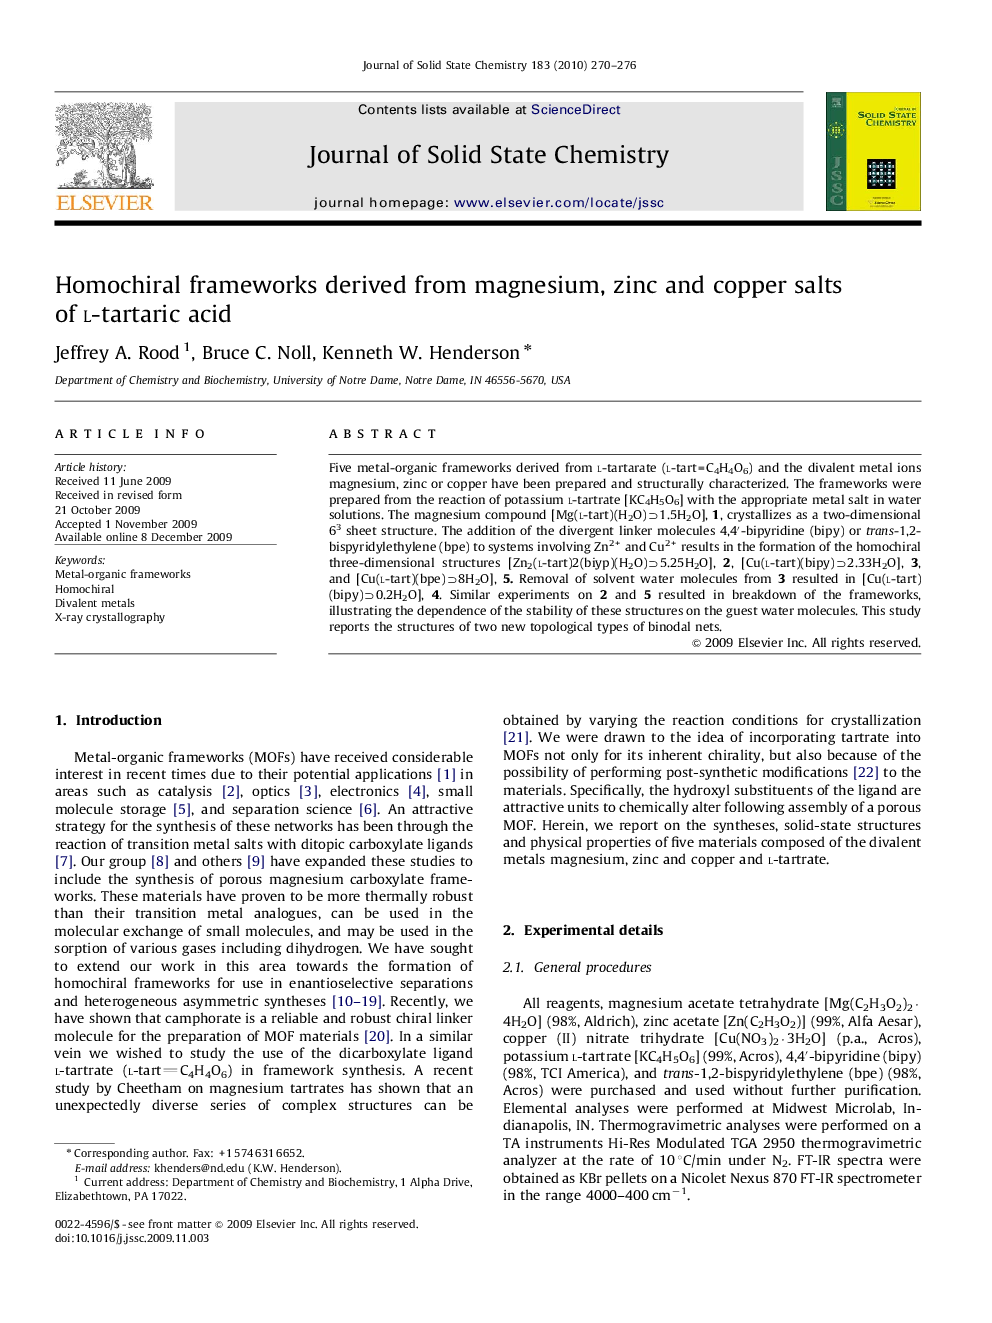 Homochiral frameworks derived from magnesium, zinc and copper salts of l-tartaric acid